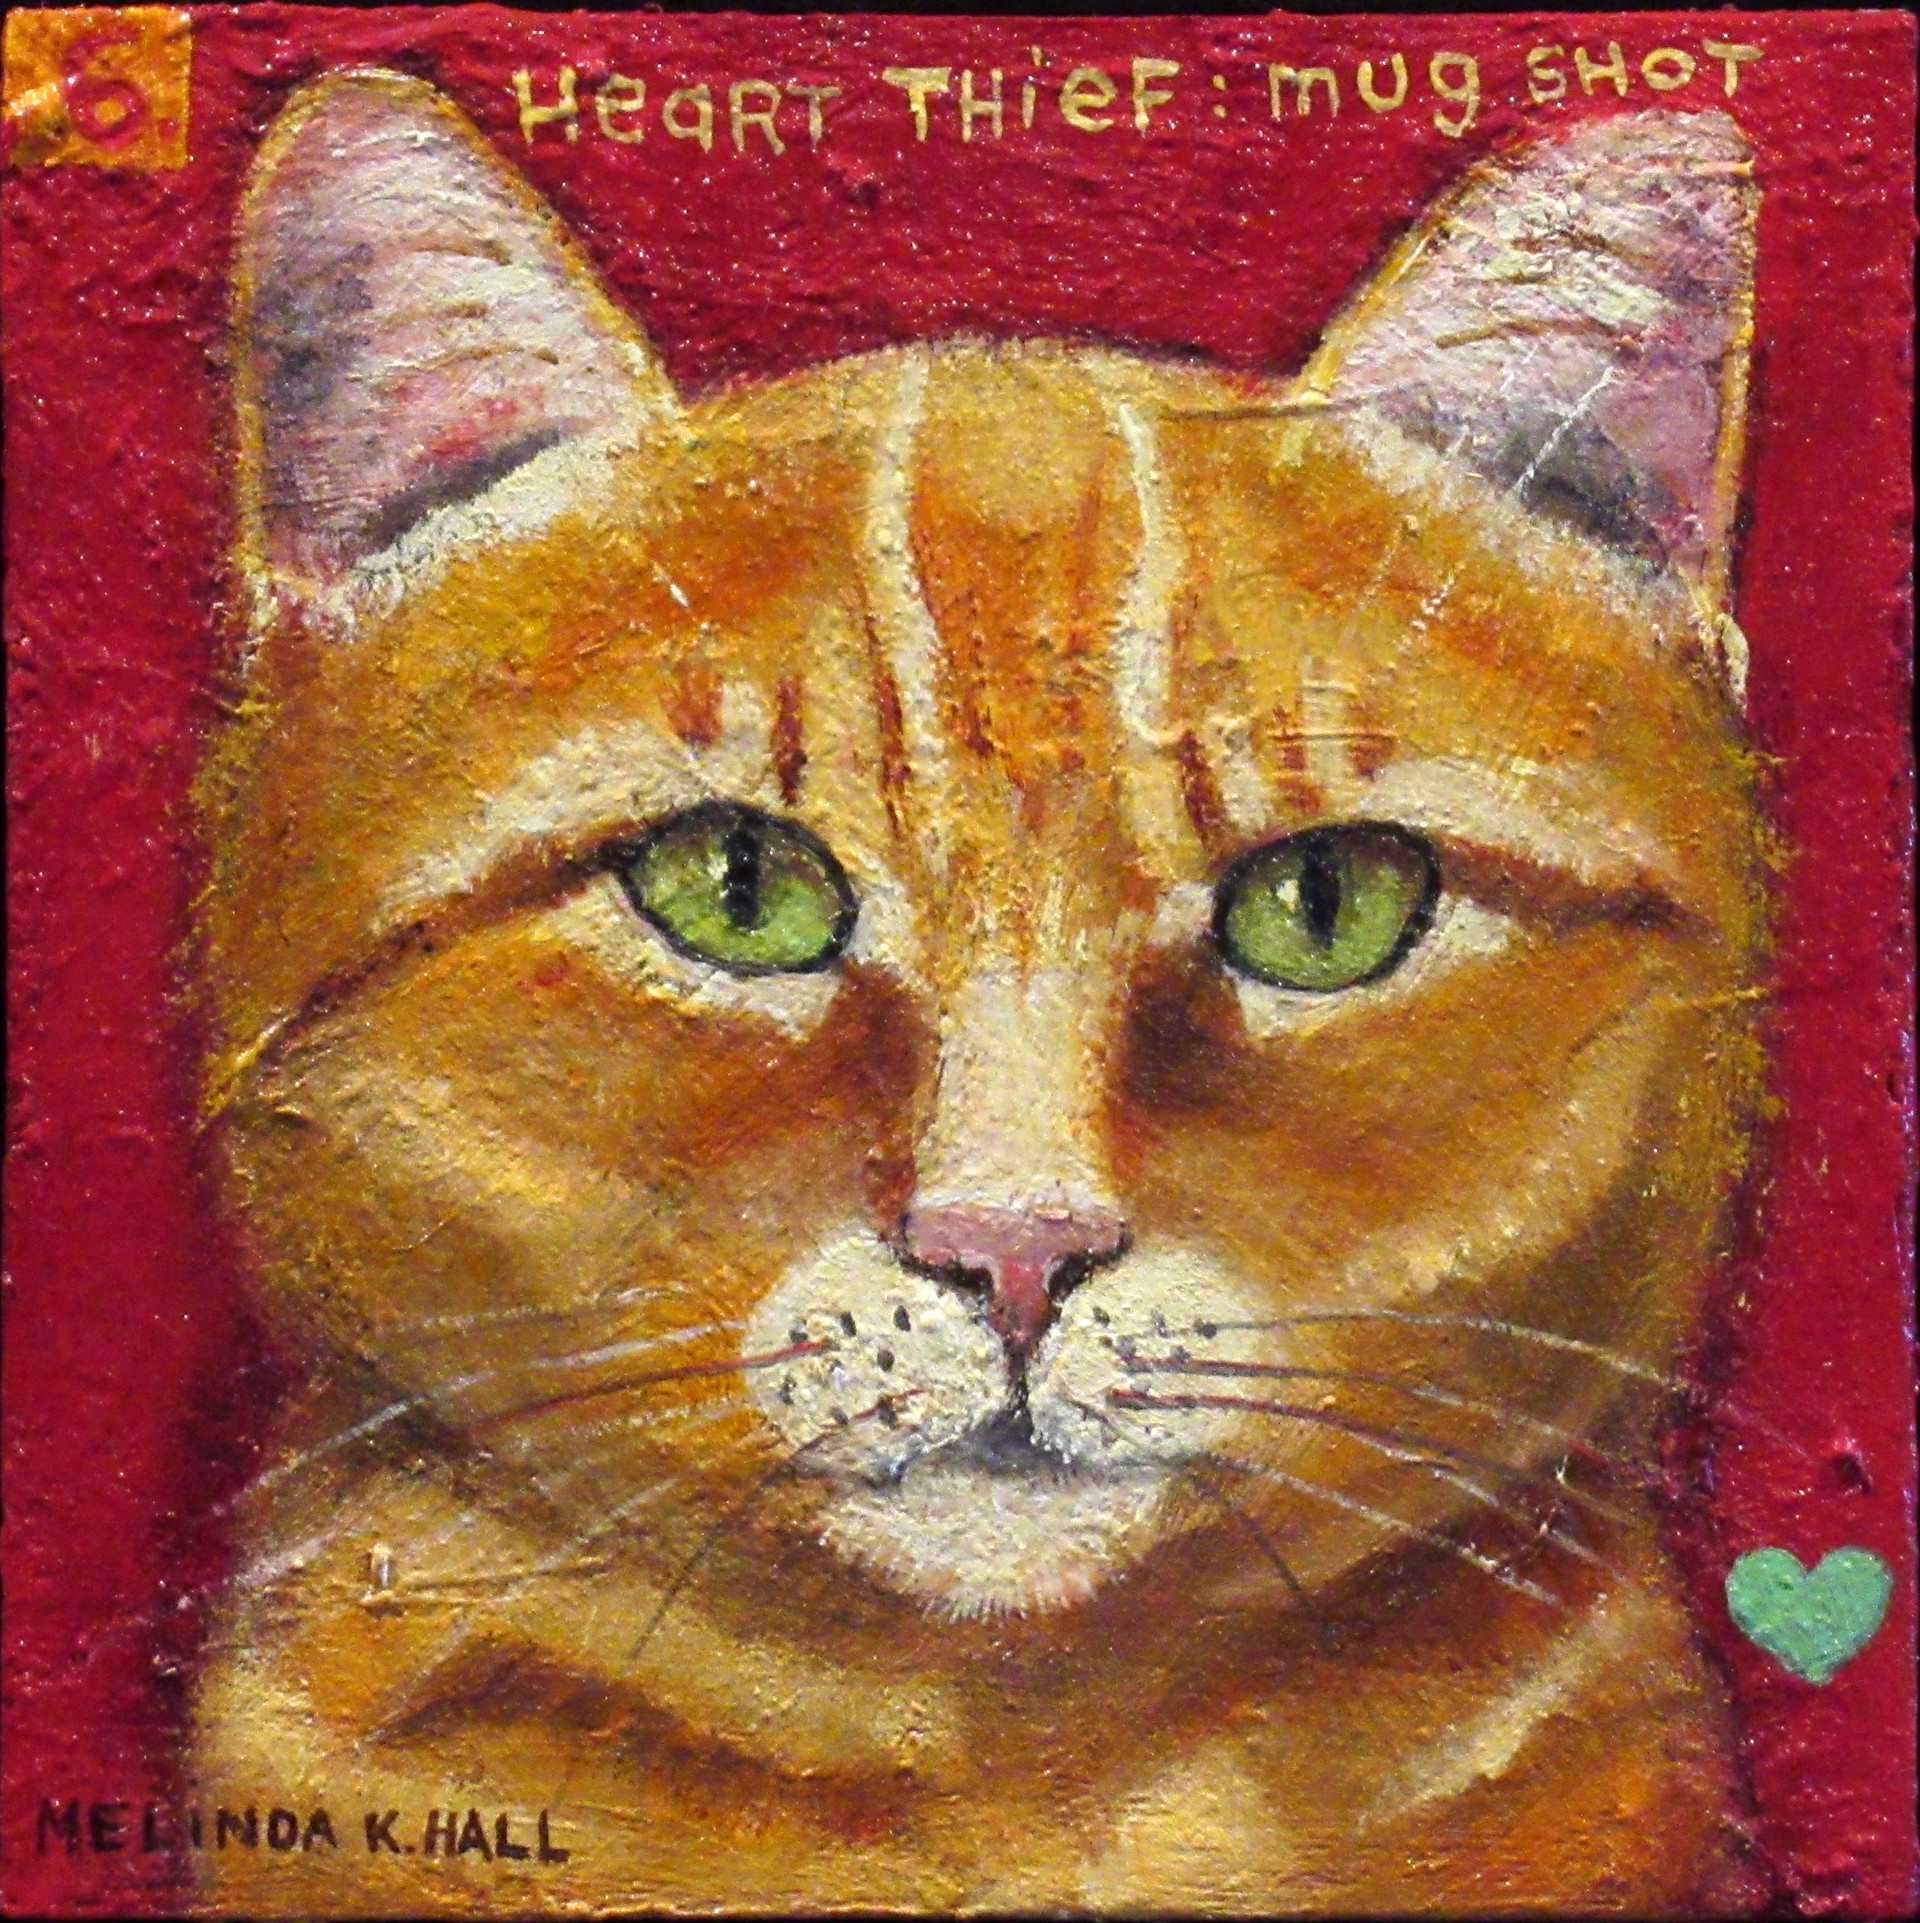 Heart Thief:  Mug Shot #6 by Melinda K. Hall